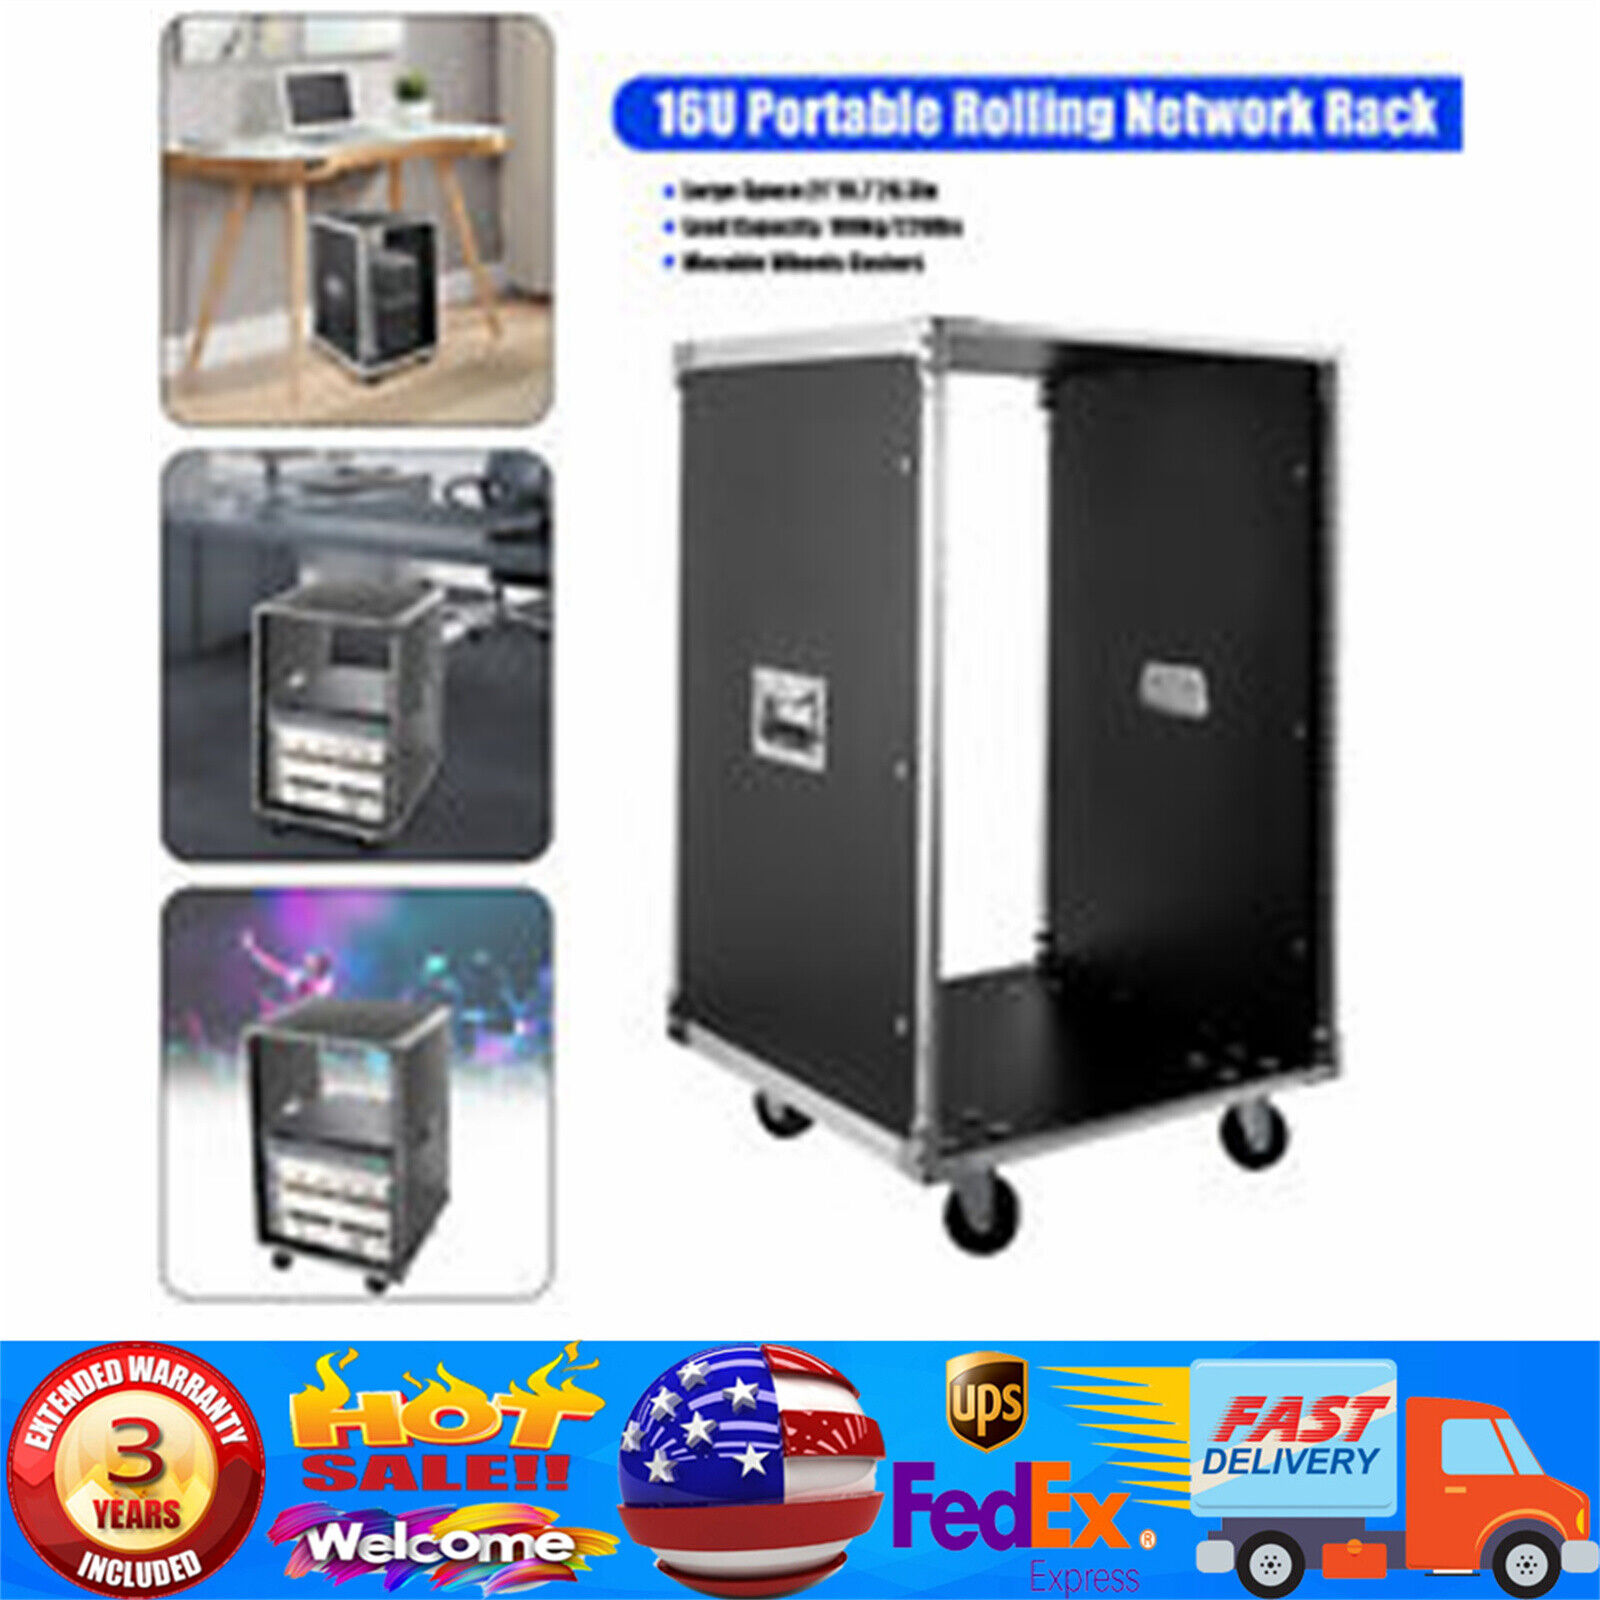 16U Portable Rolling Cart Shelf Network Rack Audio Video Telecom Office US